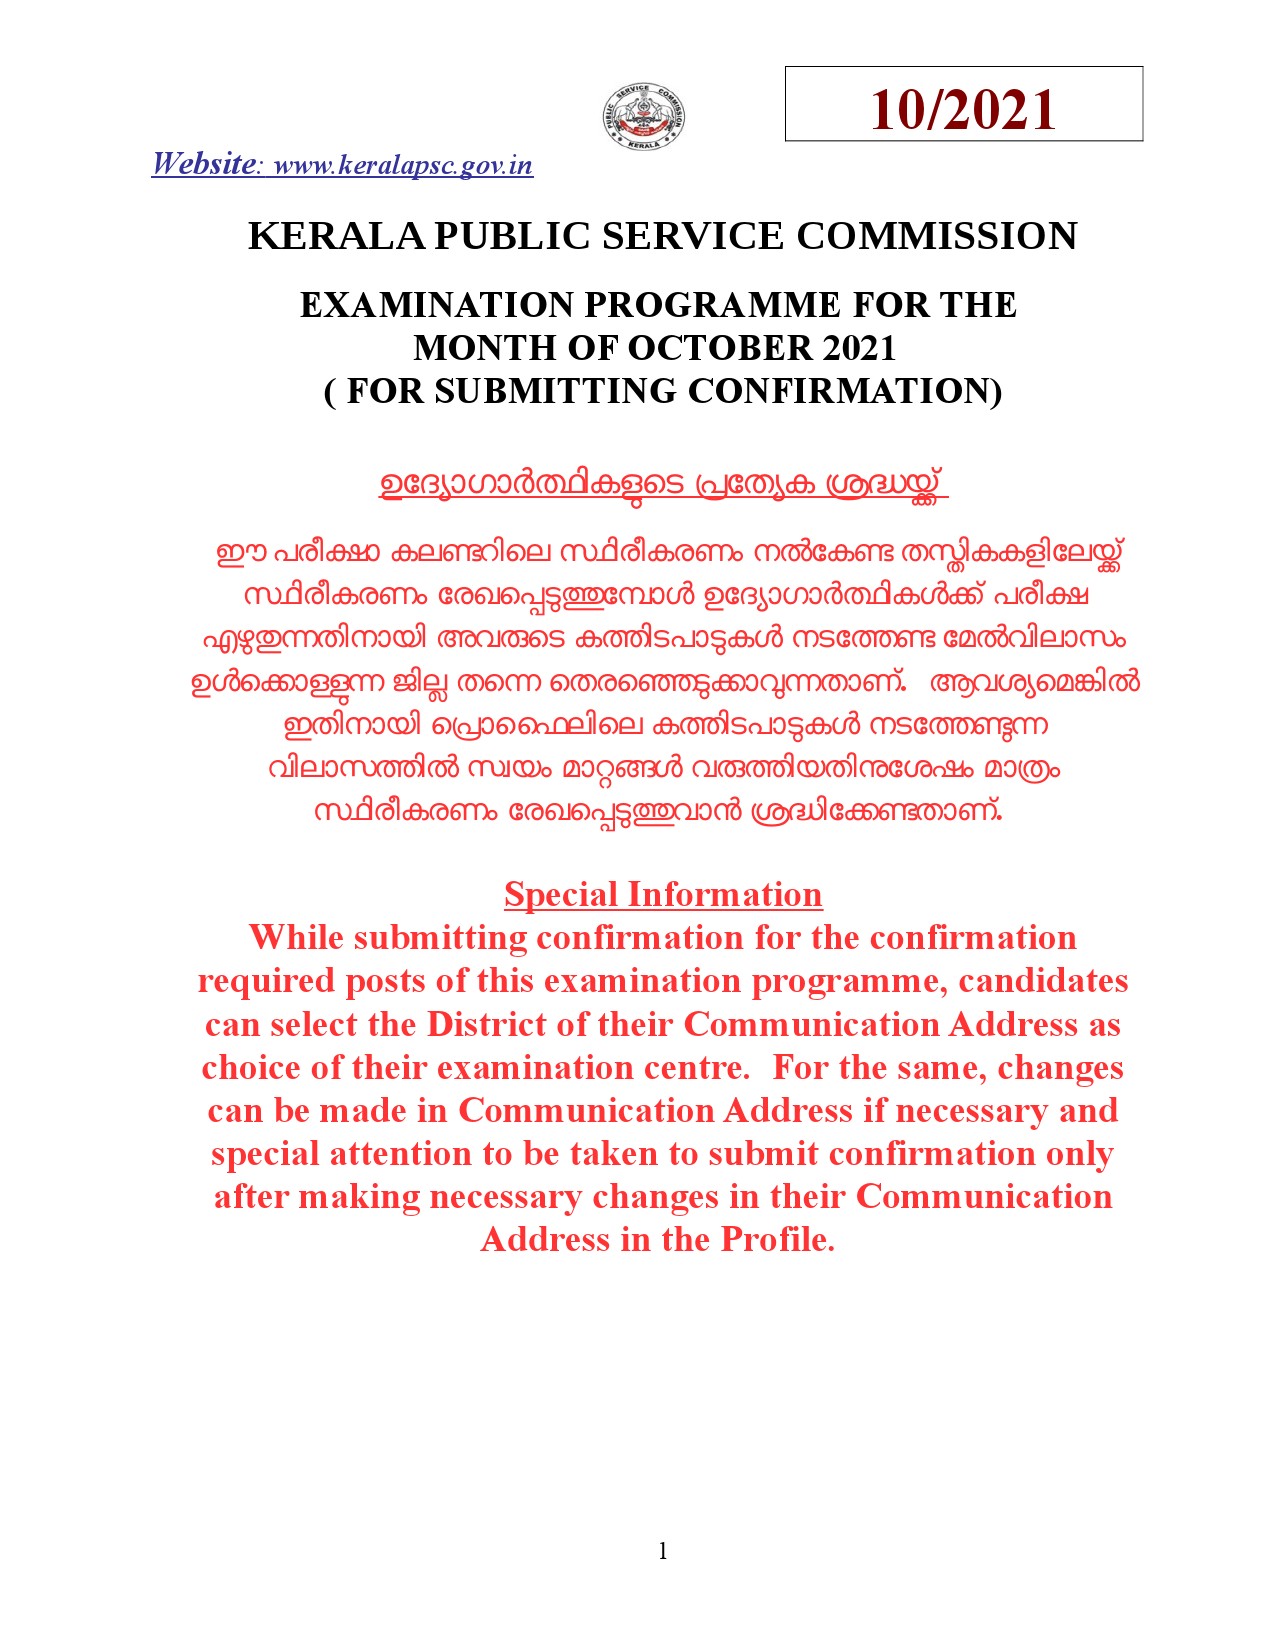 KPSC EXAMINATION PROGRAMME FOR OCTOBER 2021 - Notification Image 1